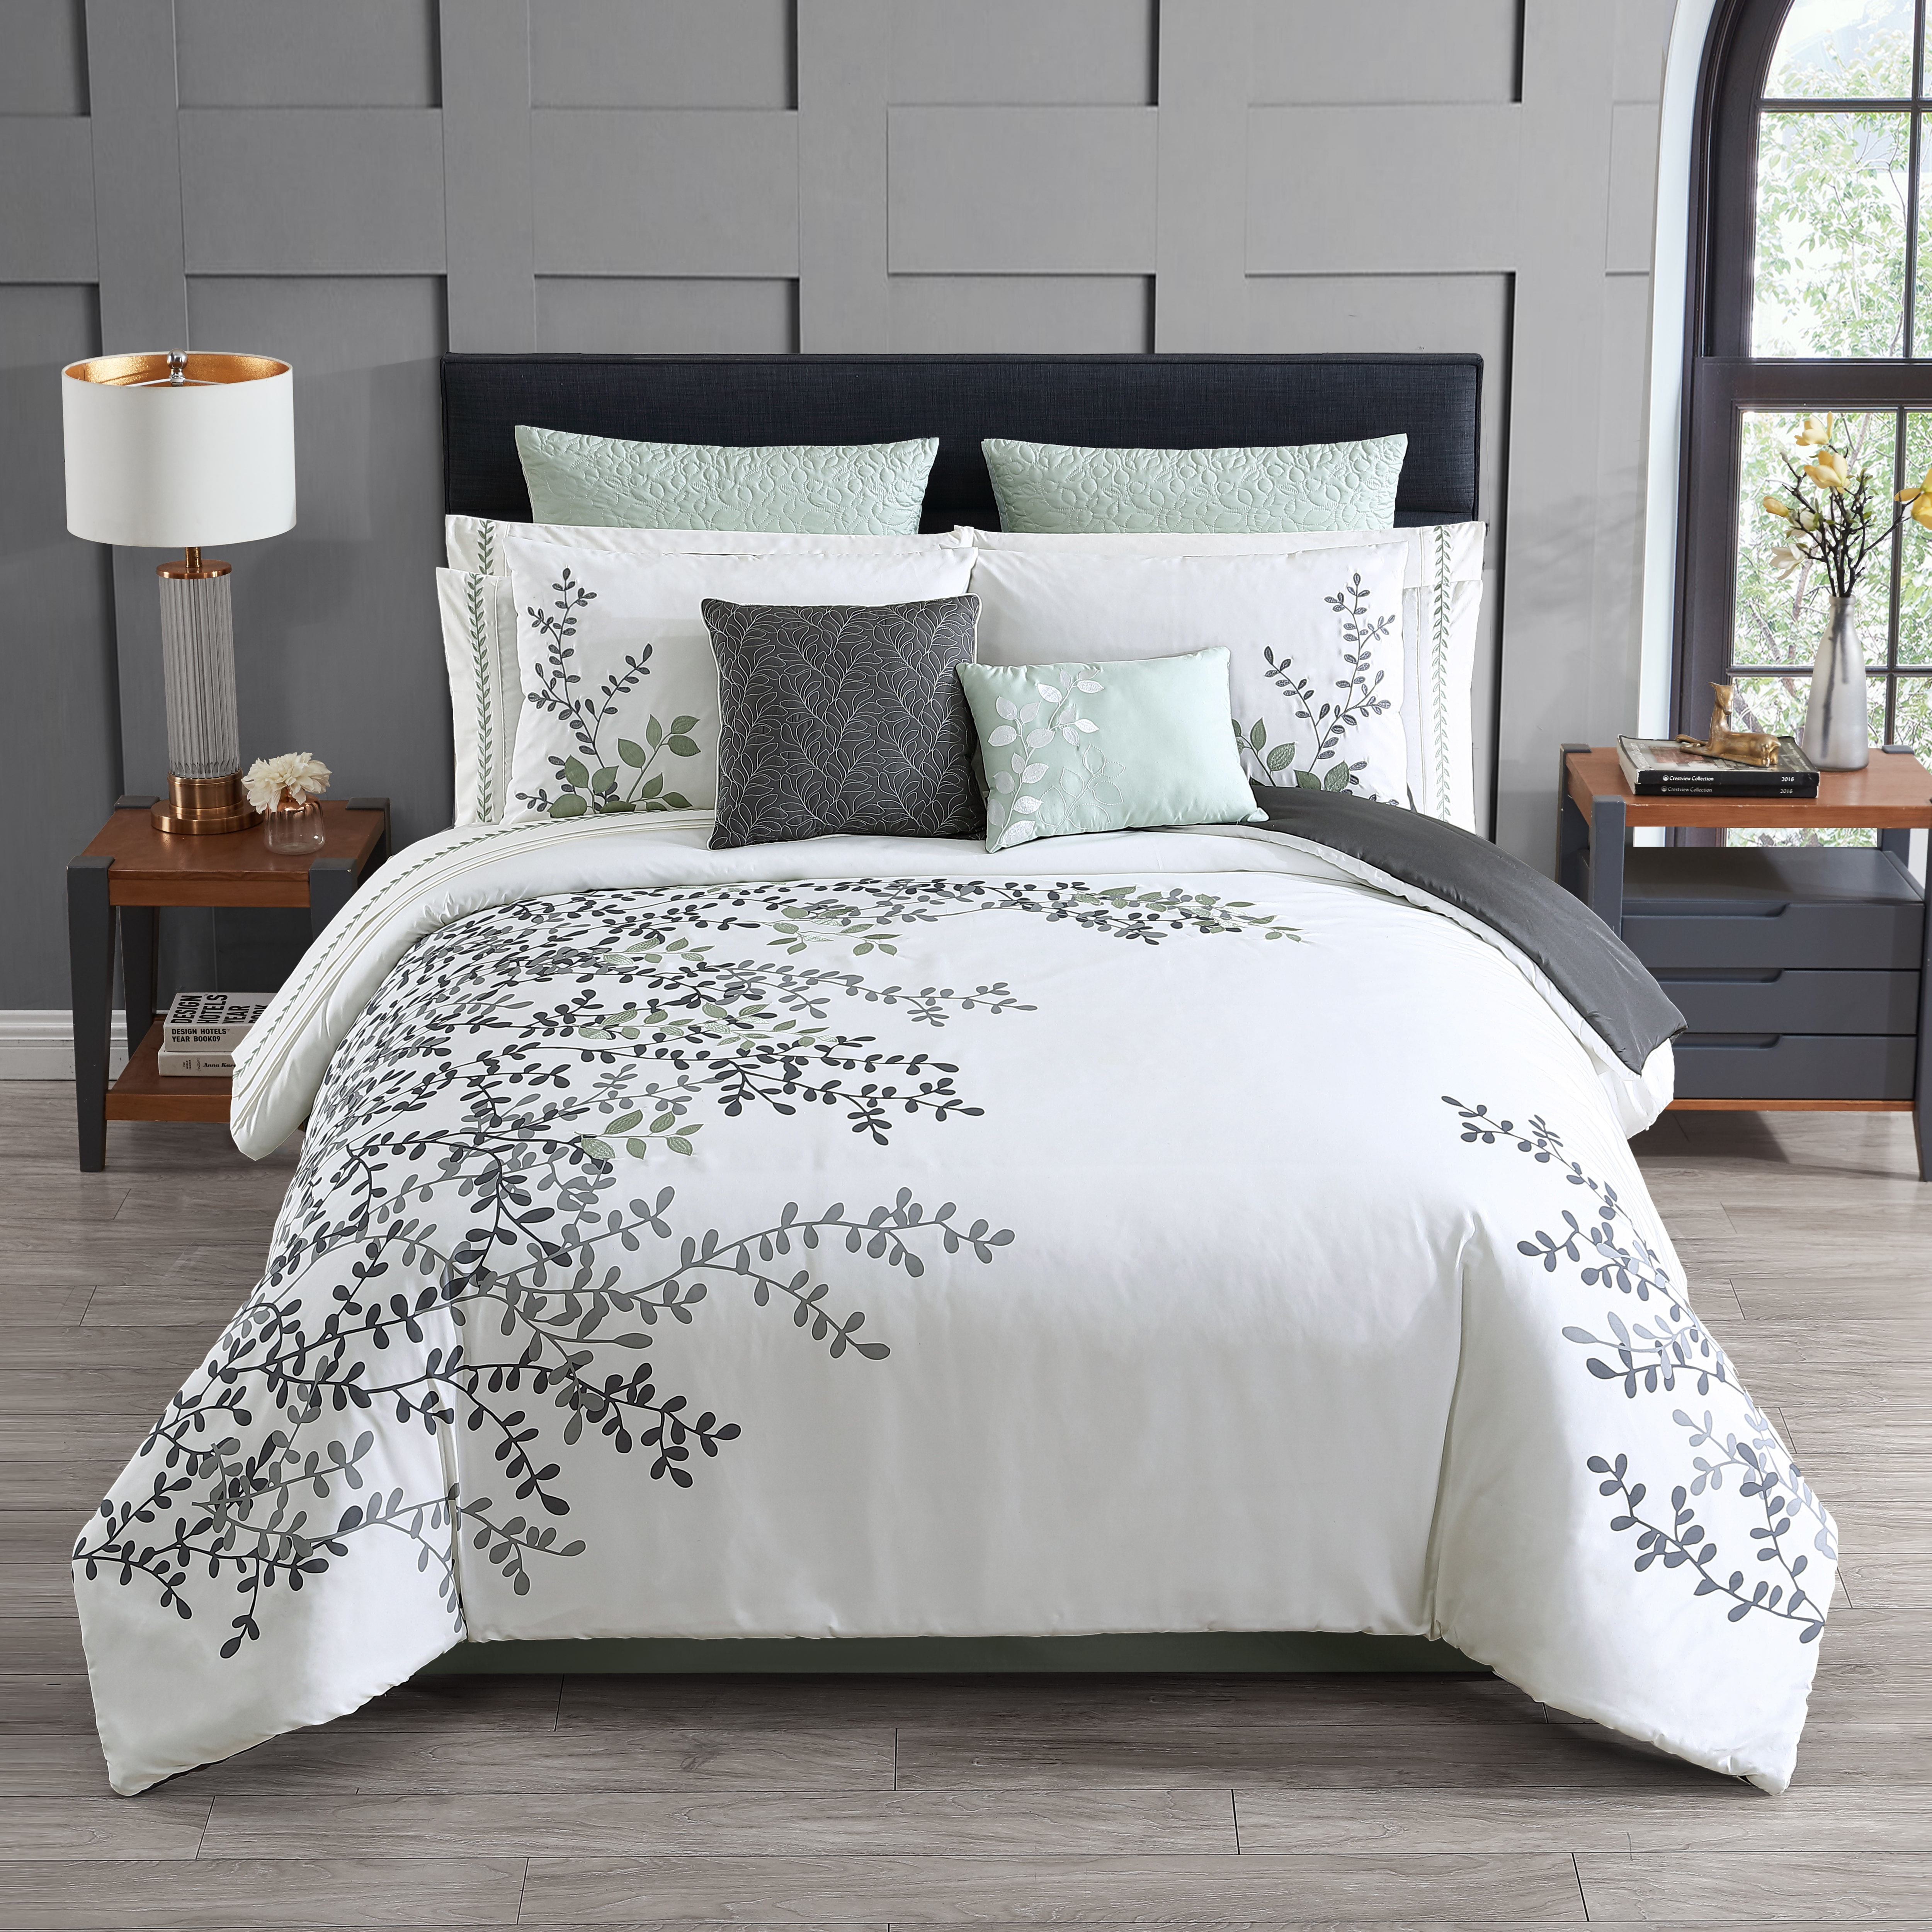 New Printed Duvet Home Hotel Quilt Cover Designing Reversible Bedding Set 